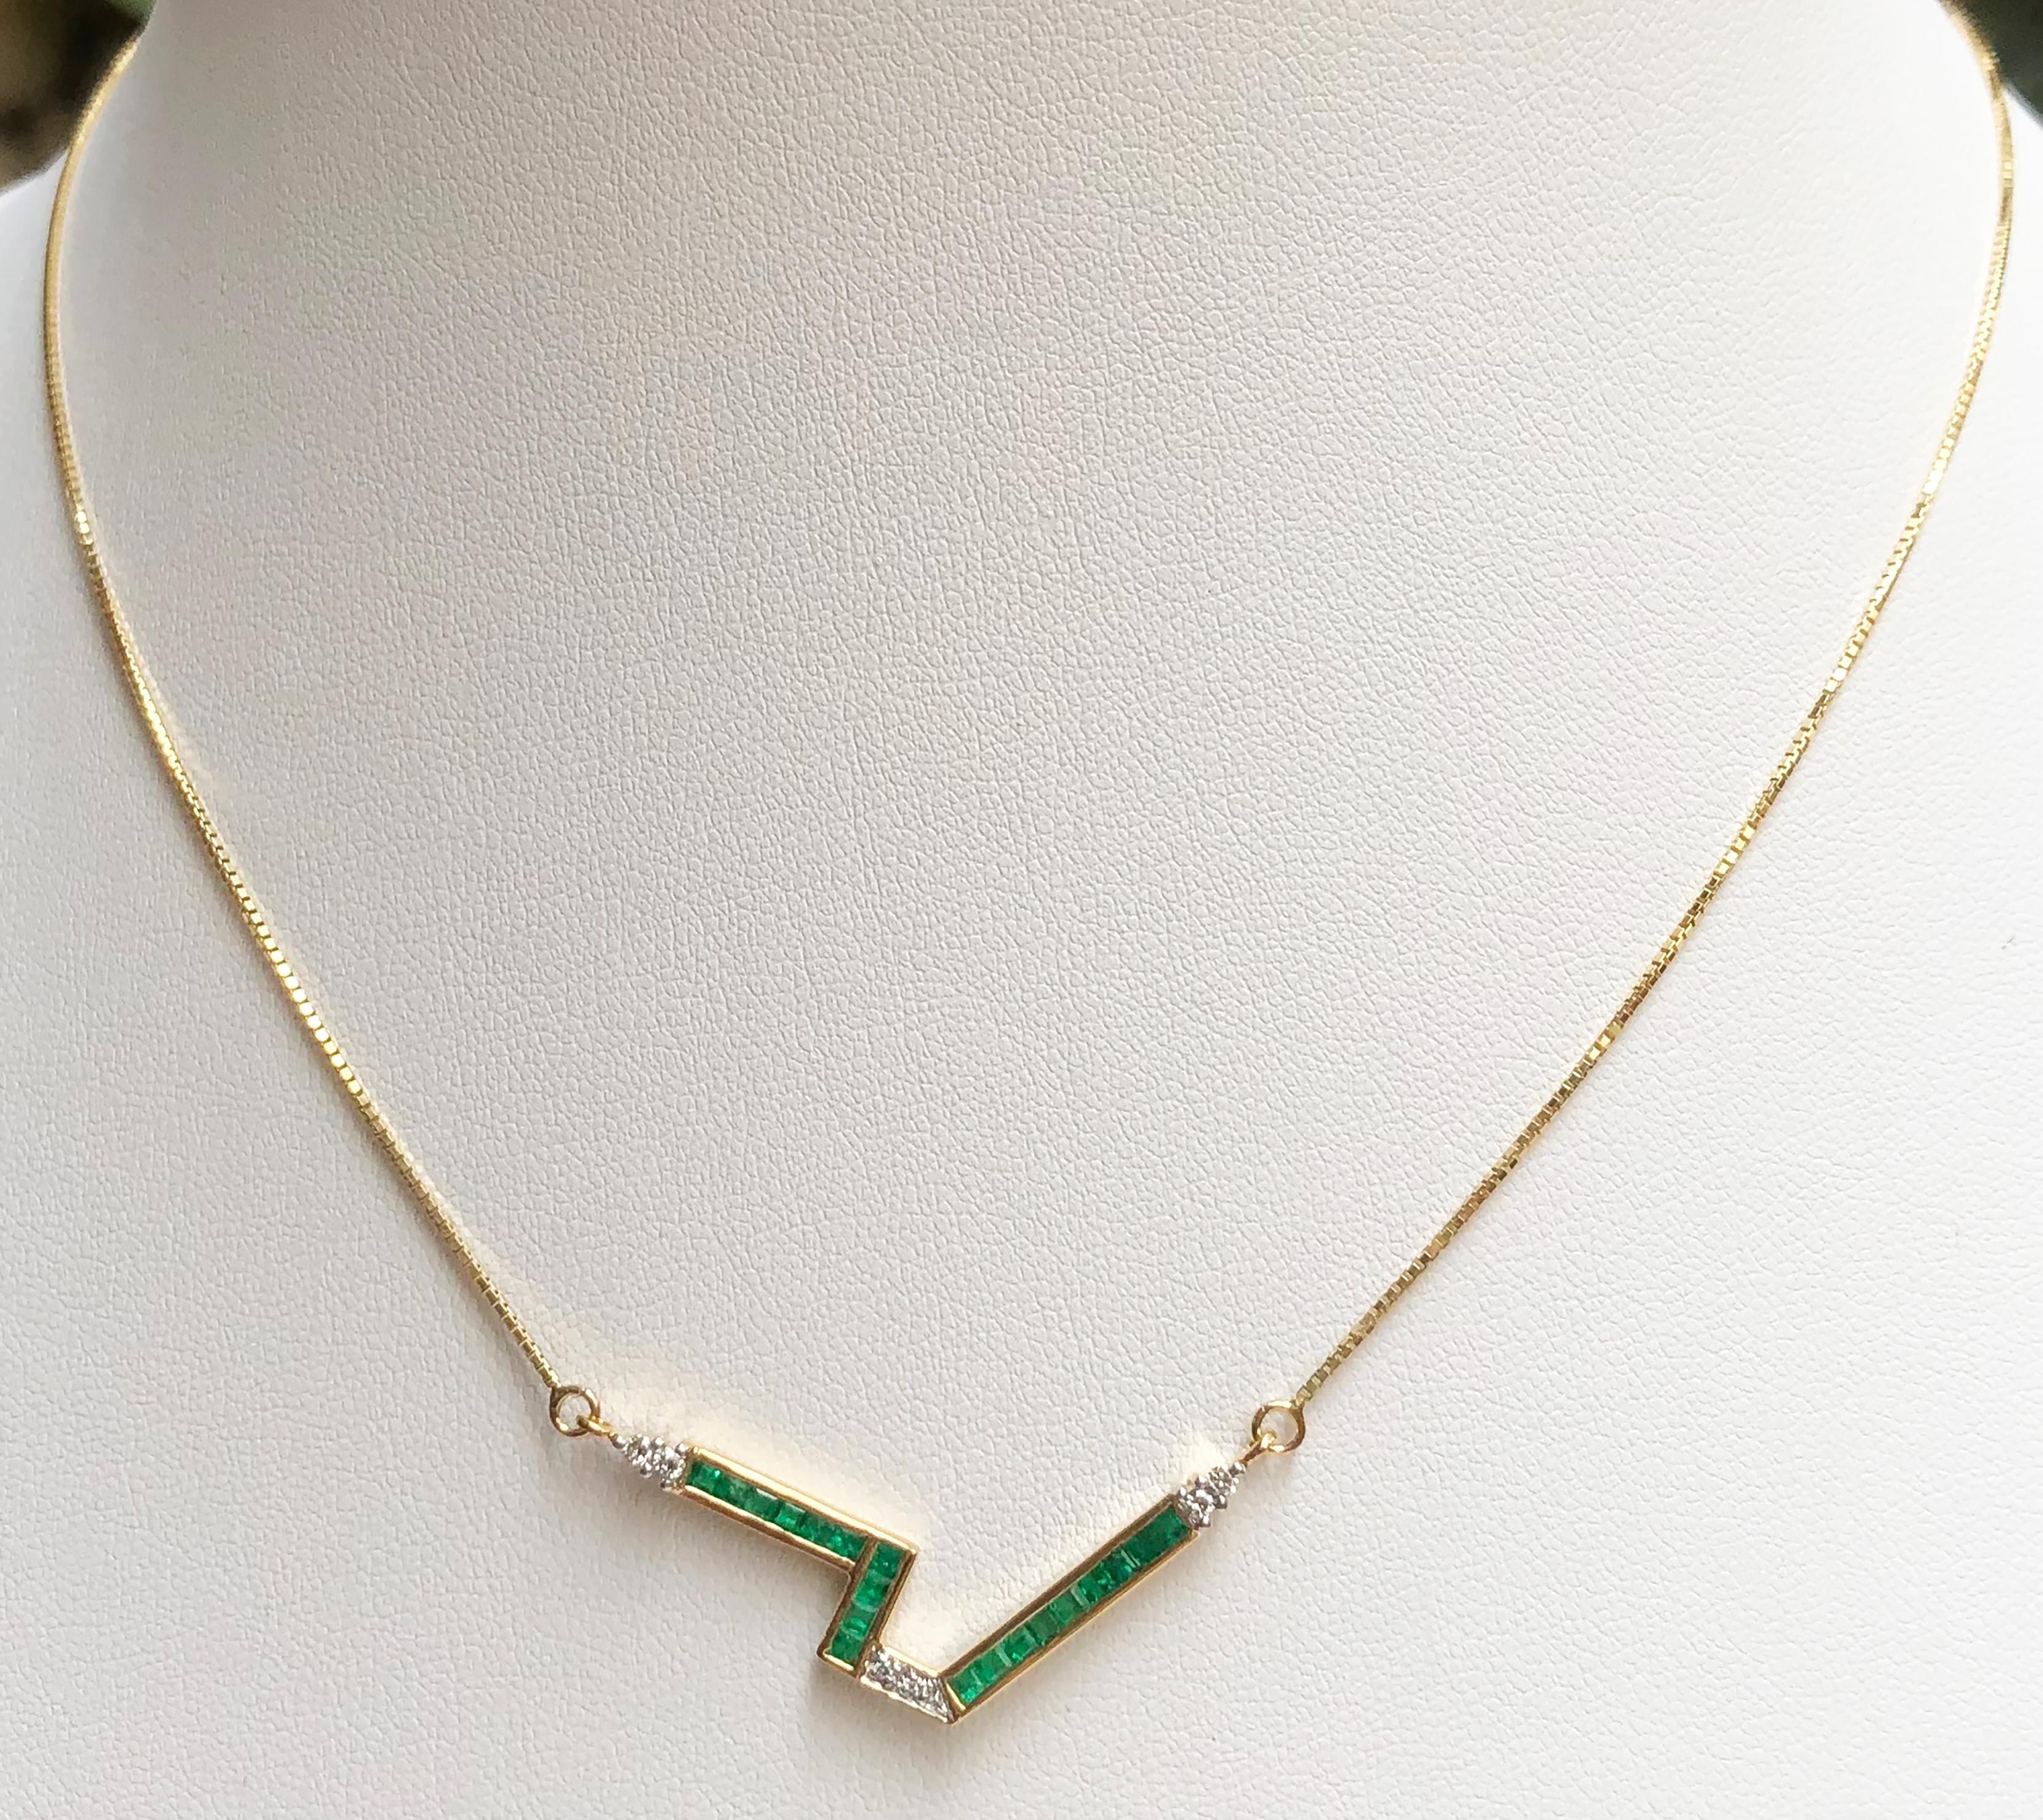 Emerald 0.56 carat with Diamond 0.09 carat Necklace set in 18 Karat Gold Settings

Width:  3.8 cm 
Length: 41.0 cm
Total Weight: 4.23 grams

